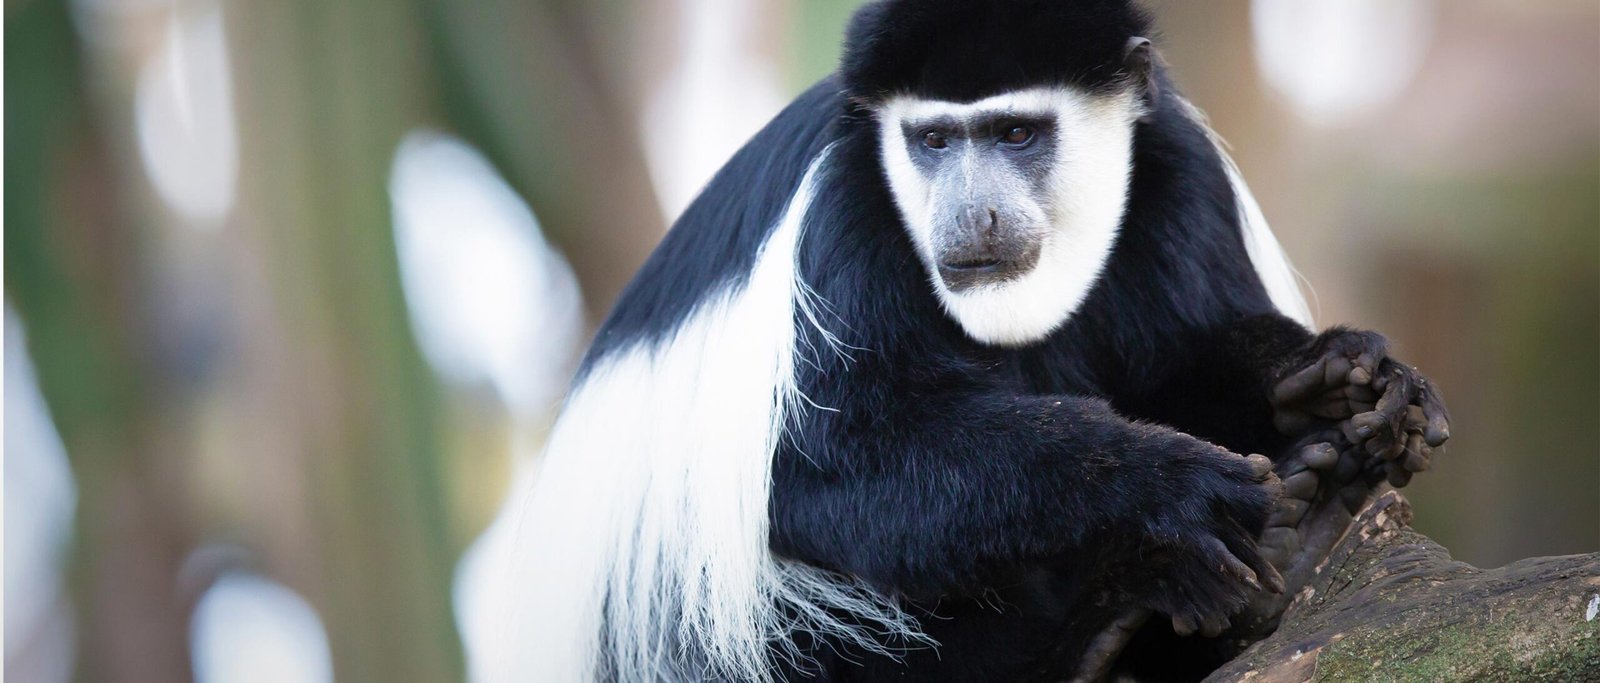 Black-and-White Colobus monkey